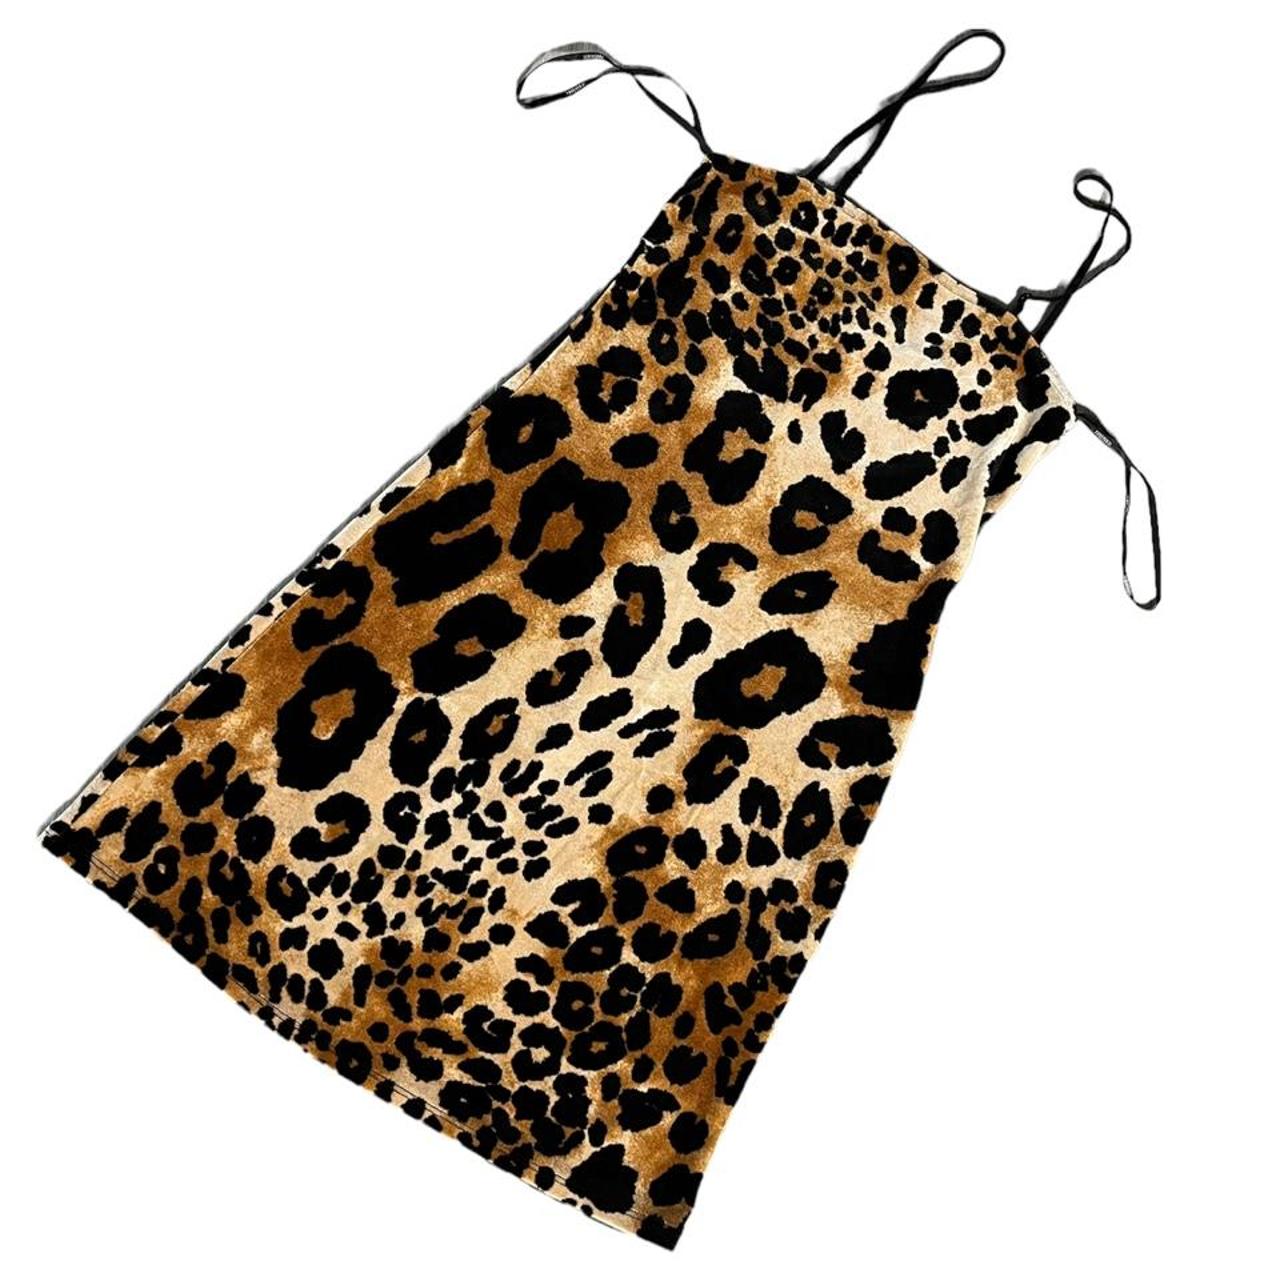 Product Image 1 - Now listing: Velvet cheetah print